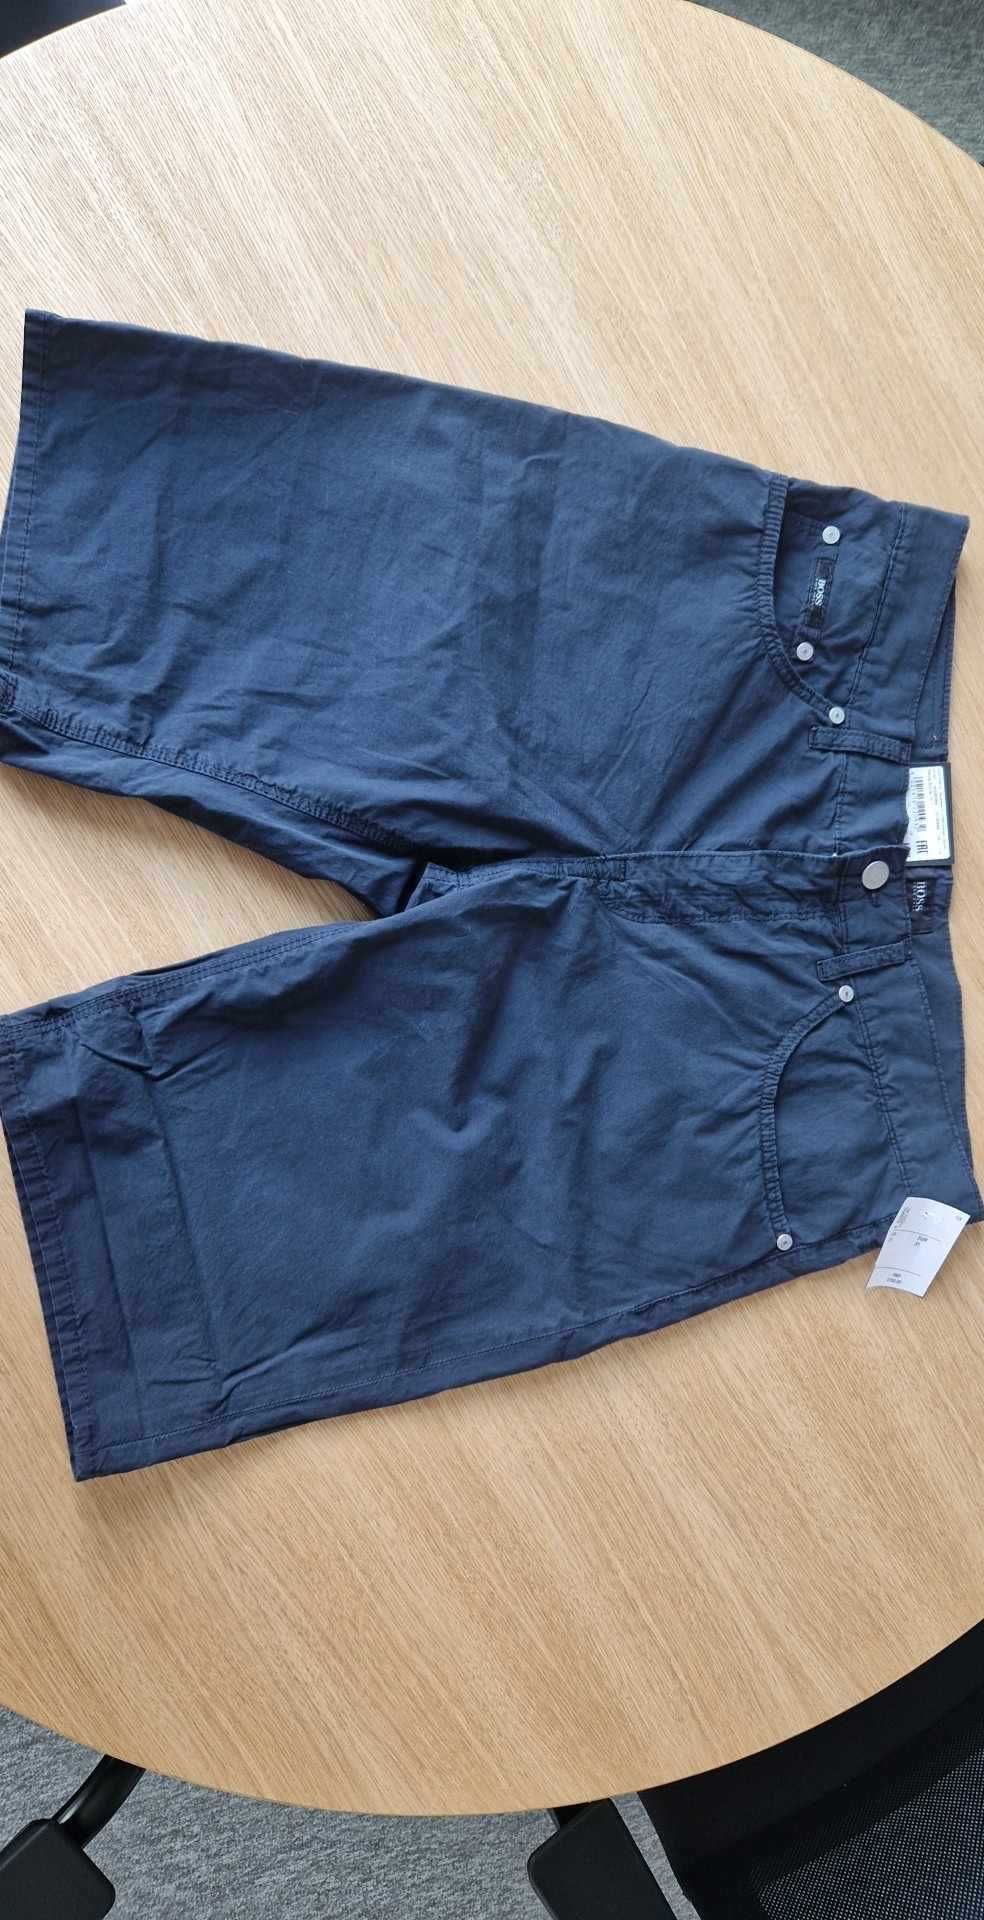 HUGO BOSS
Dark Navy Maine Regular Fit Shorts
Size W31